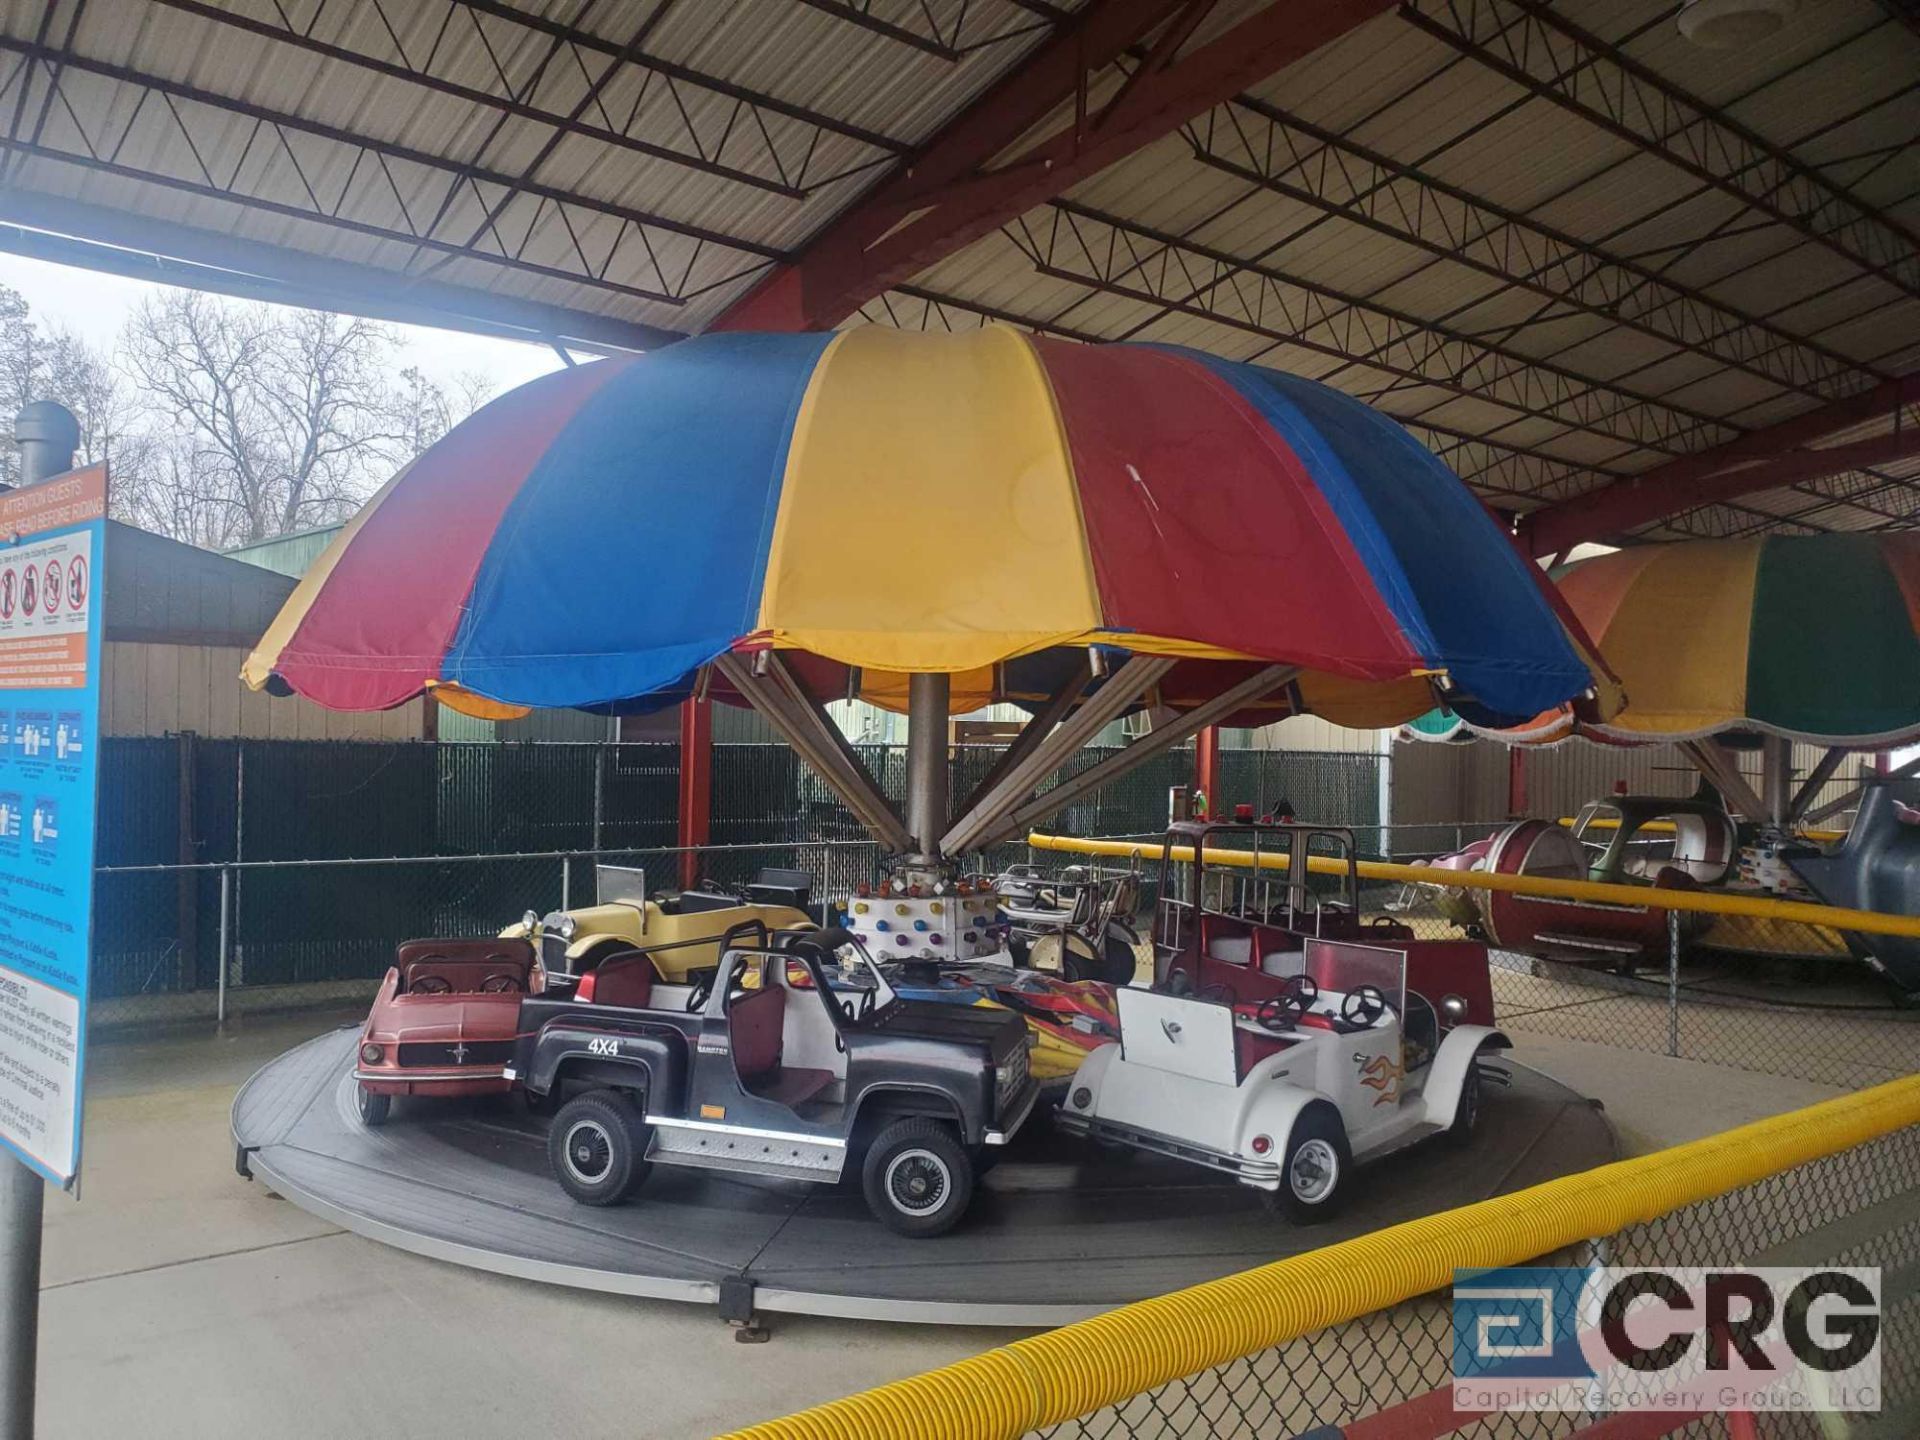 Hampton Cars and Trucks Umbrella circular Ride